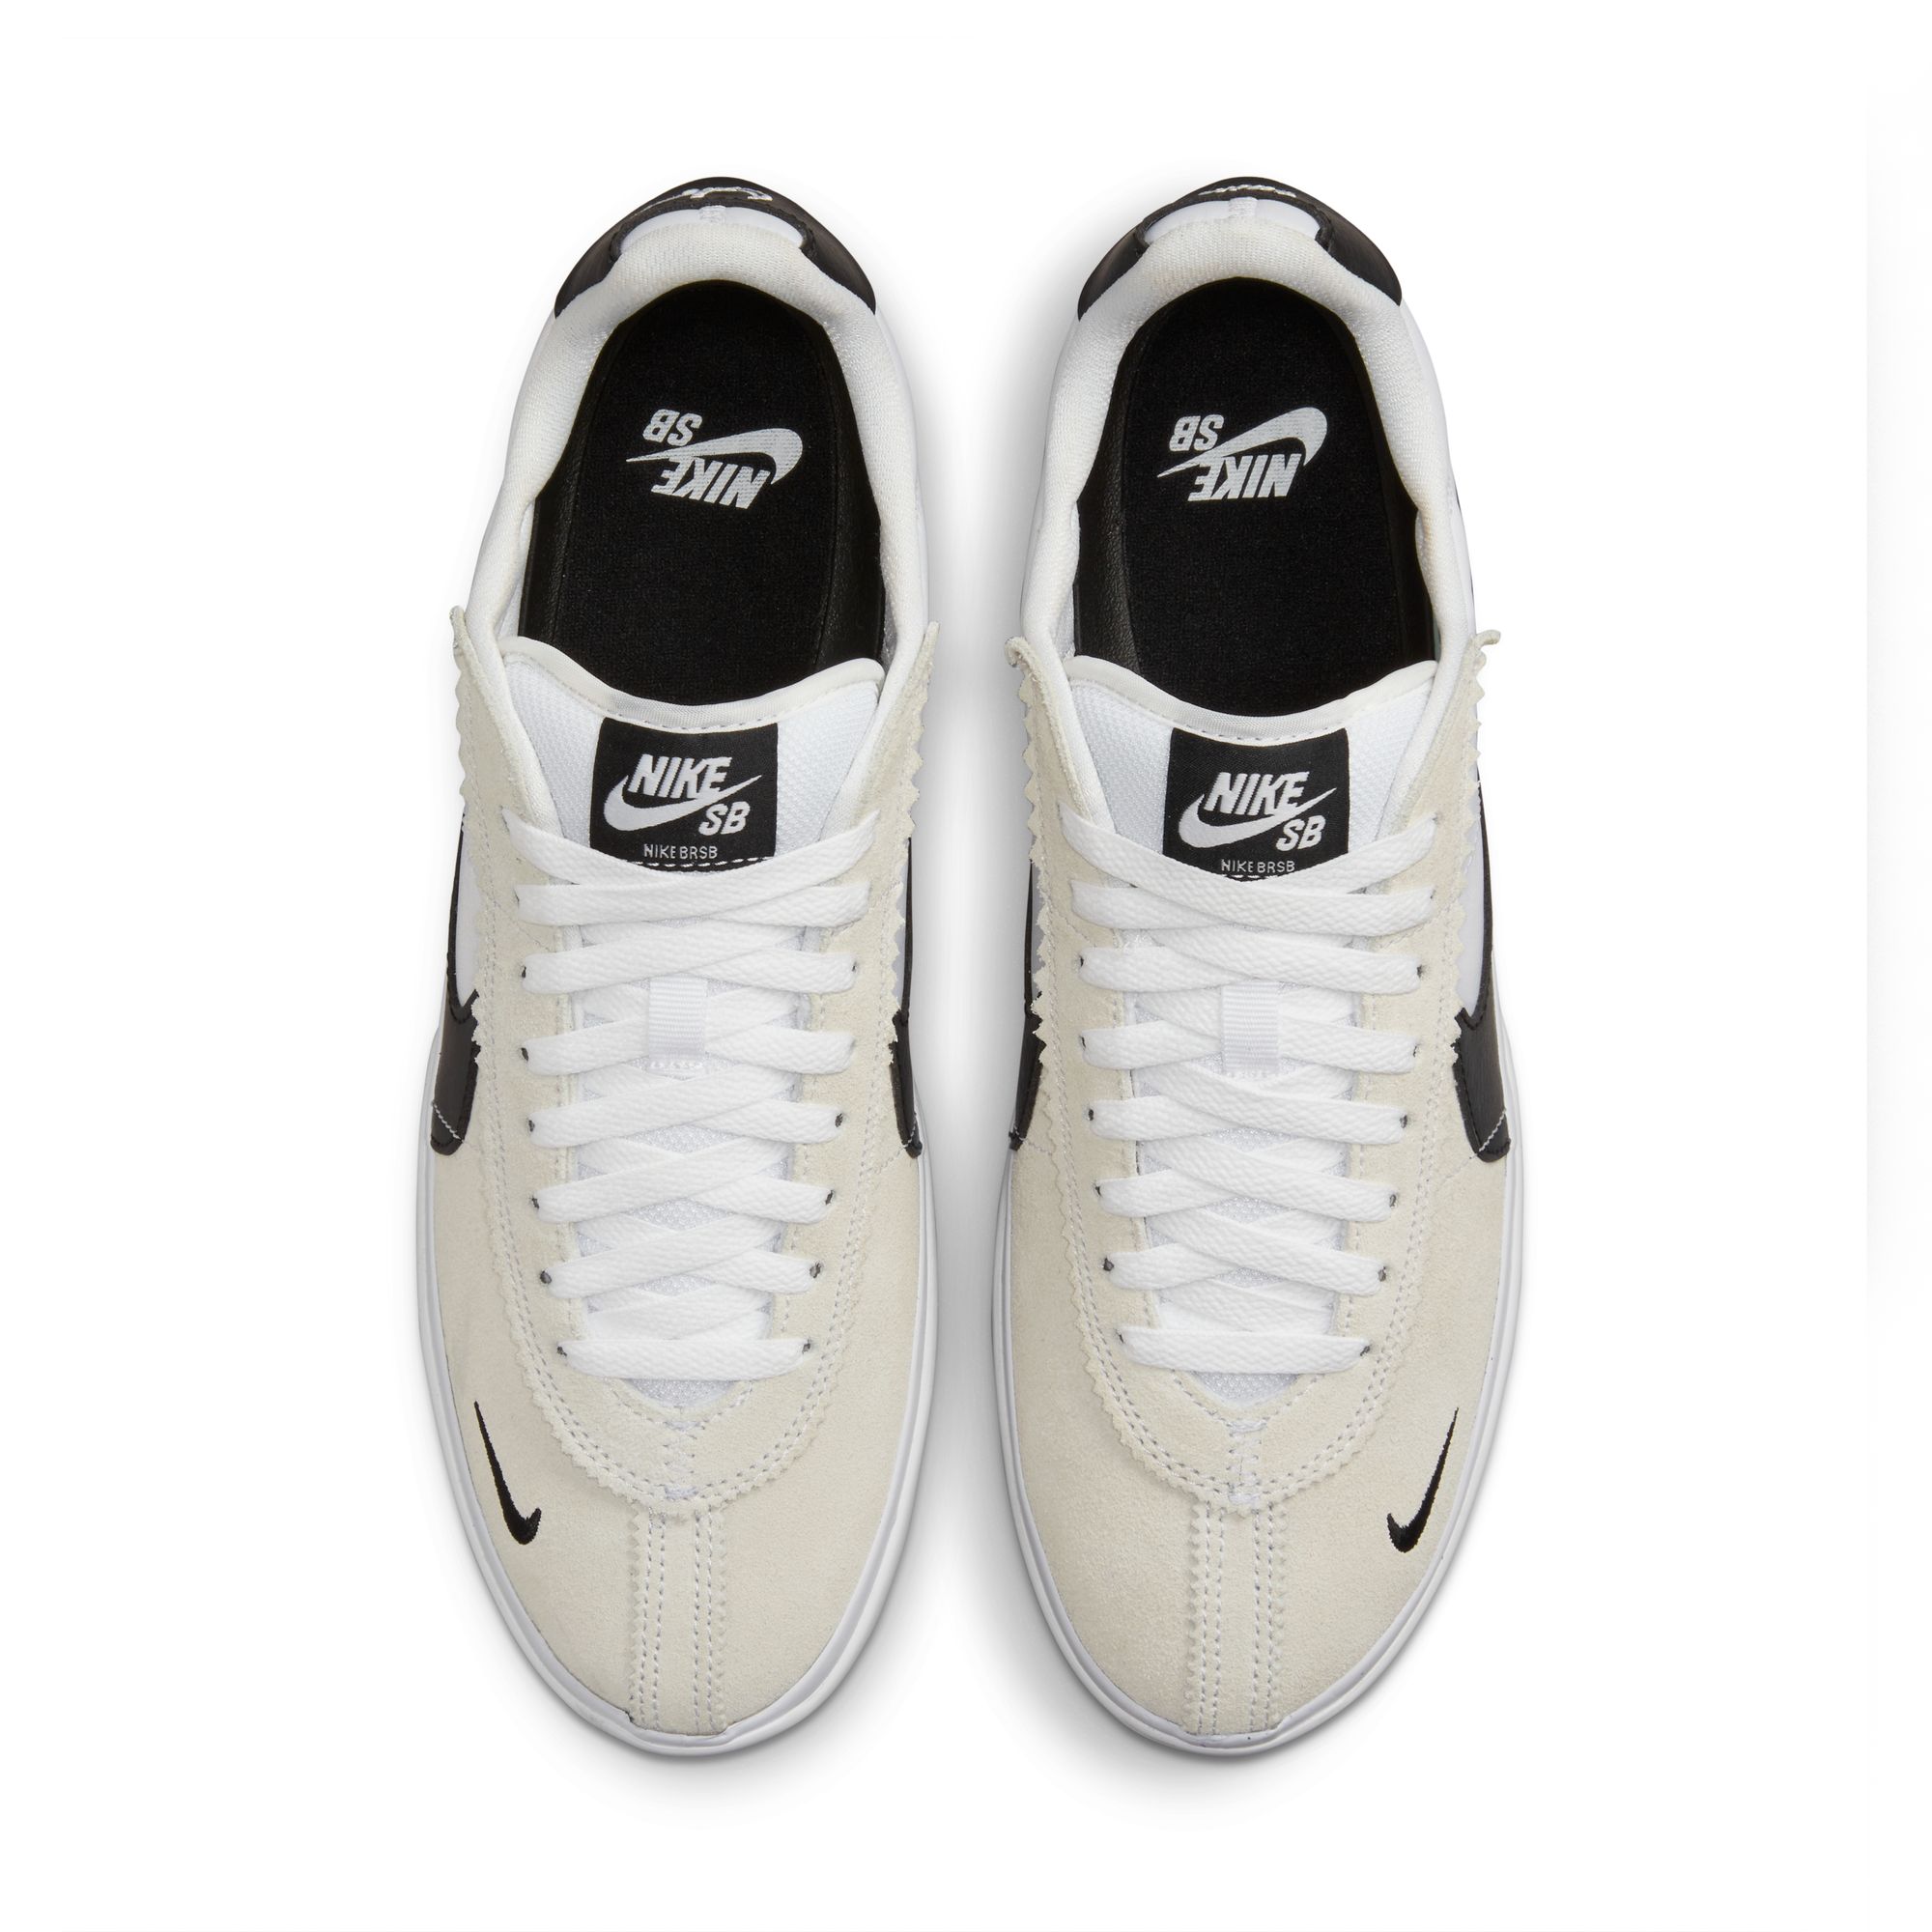 Nike SB BRSB White/Black 08